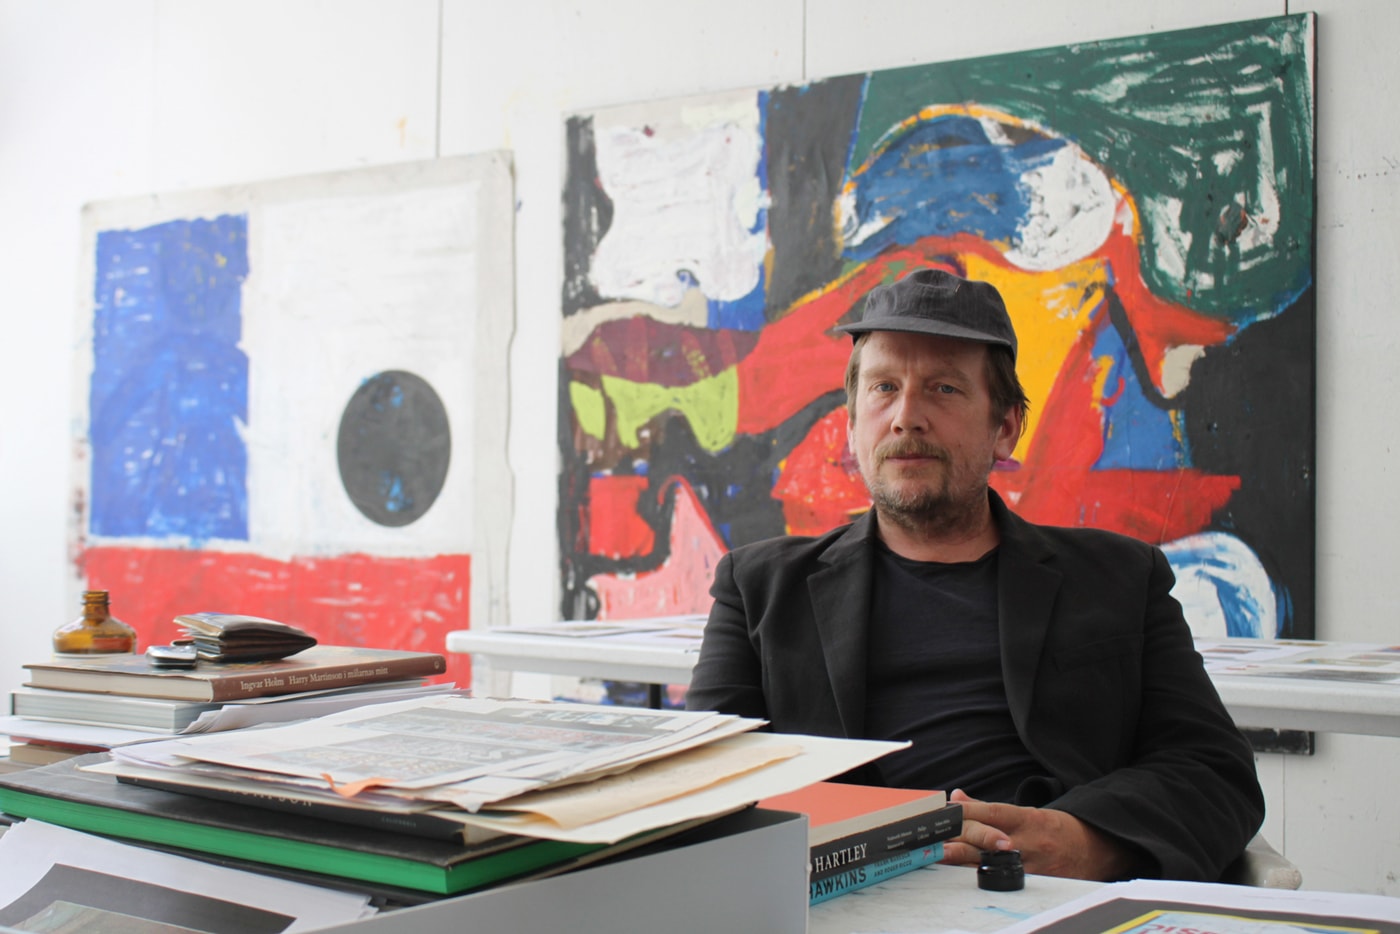 joe bradley interview elaine de kooning house artist residency